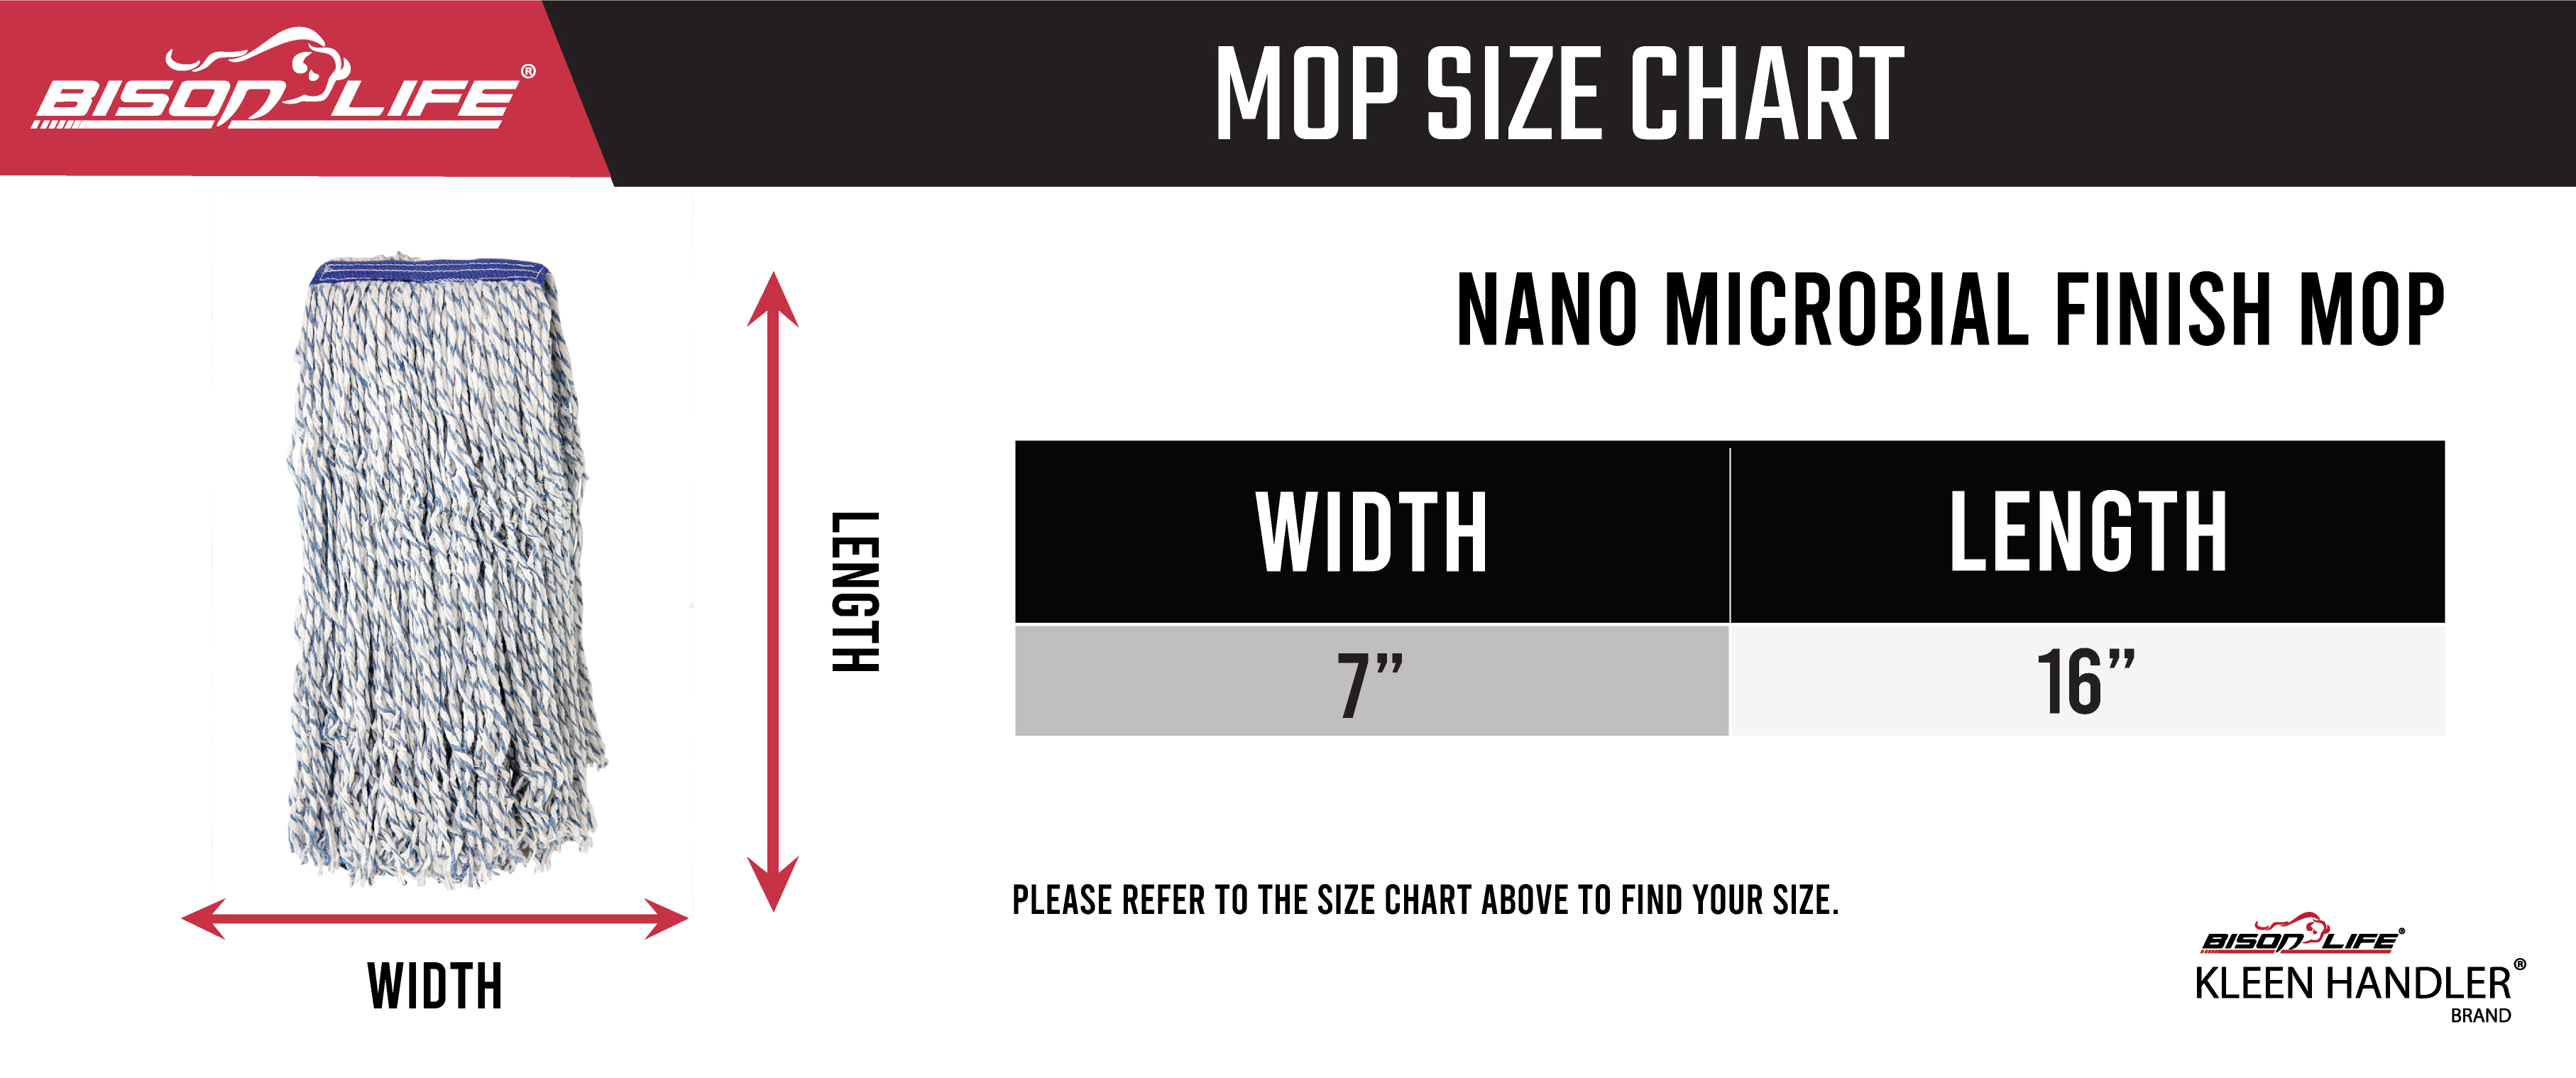 Nano Microbial Finish Mob Size Chart